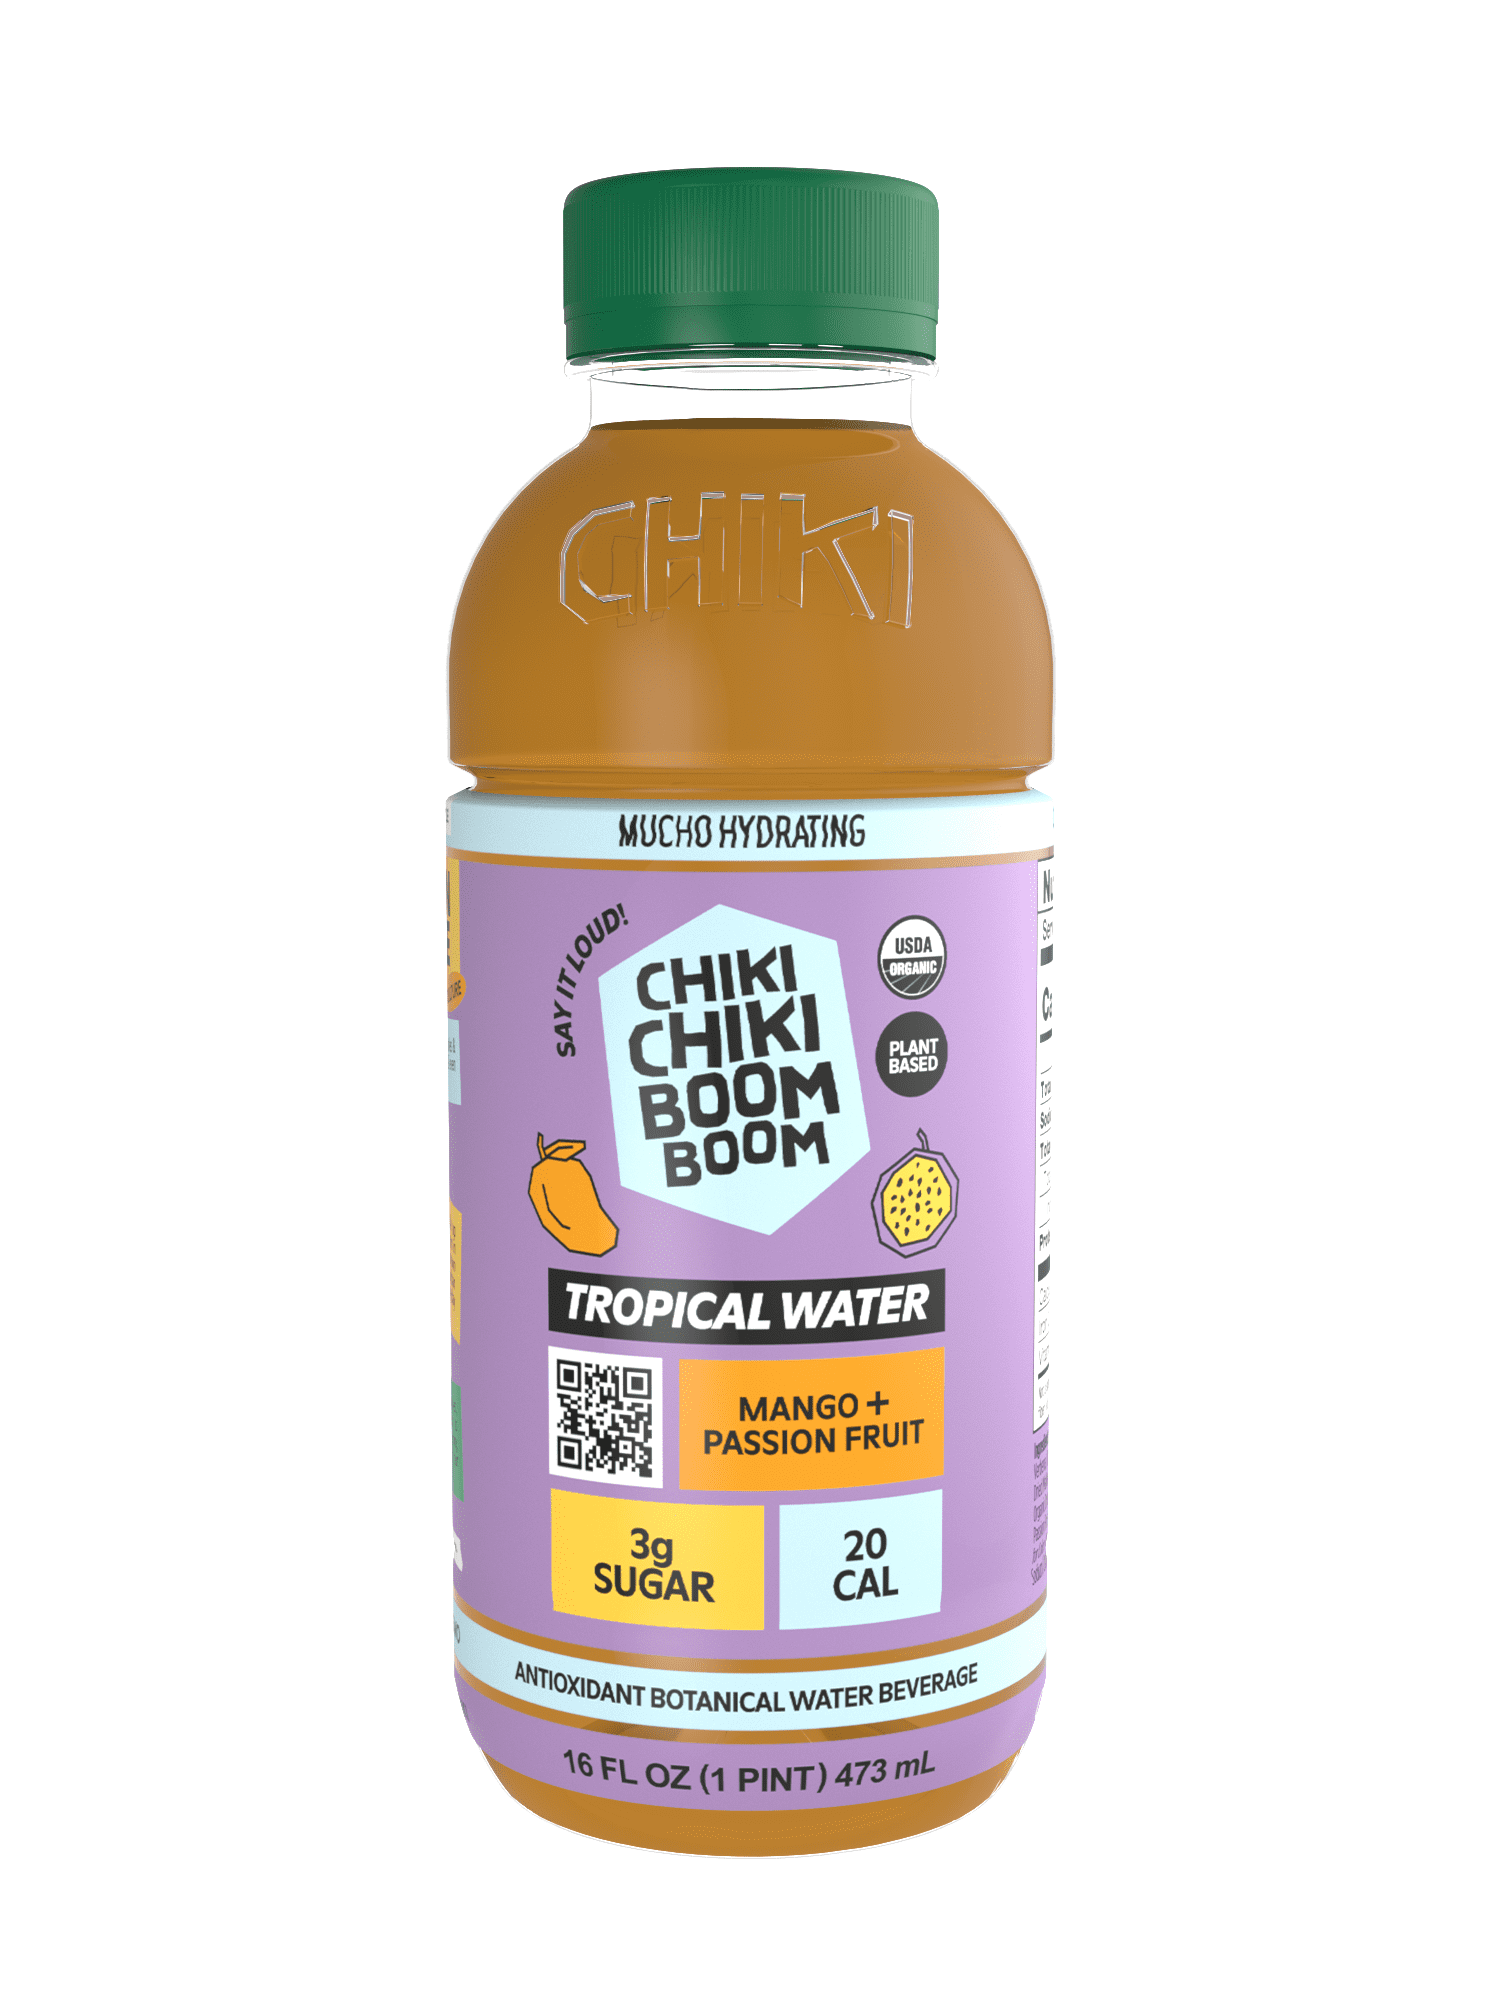 Chiki Chiki Boom Boom Mango & Passion Fruit Tropical Water 16 Fl Oz Bottle